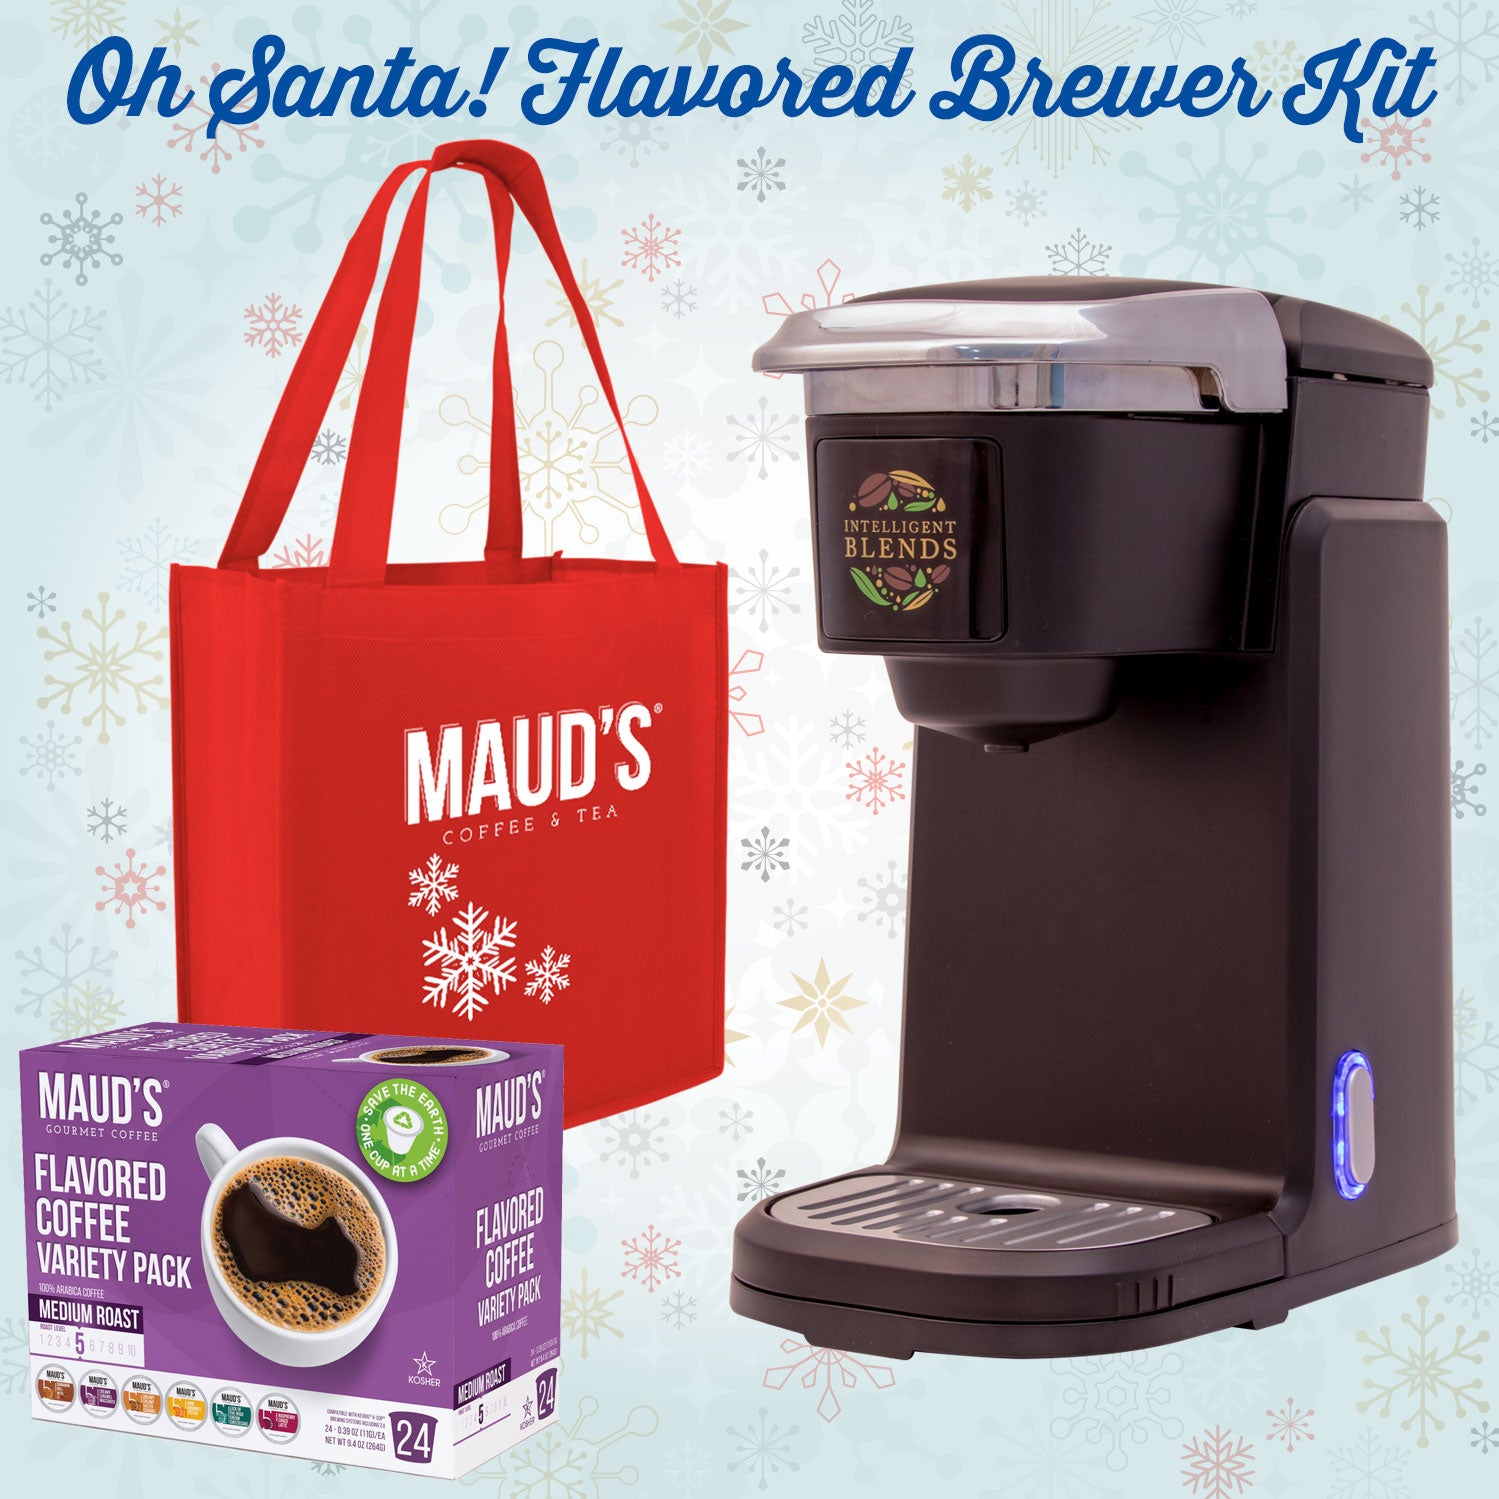 Oh Santa! Flavored Brewer Kit